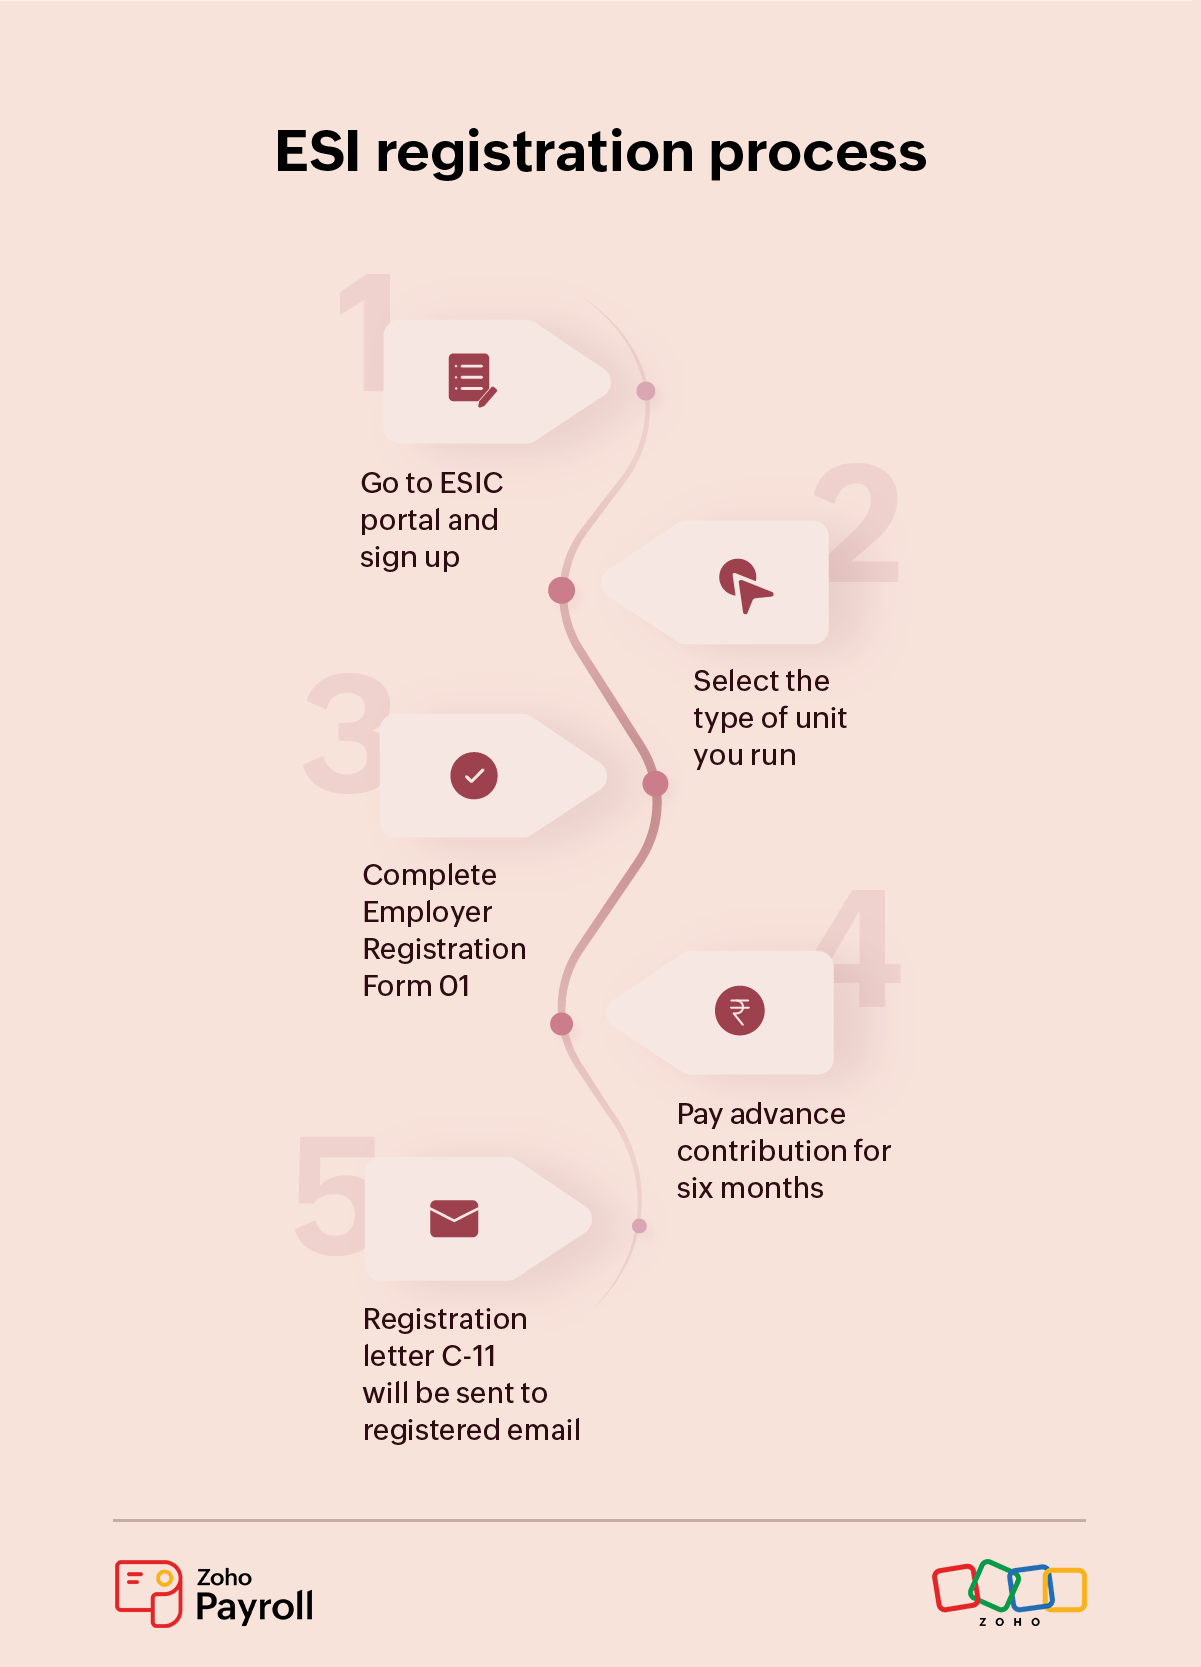 ESI-registration-process-infographic